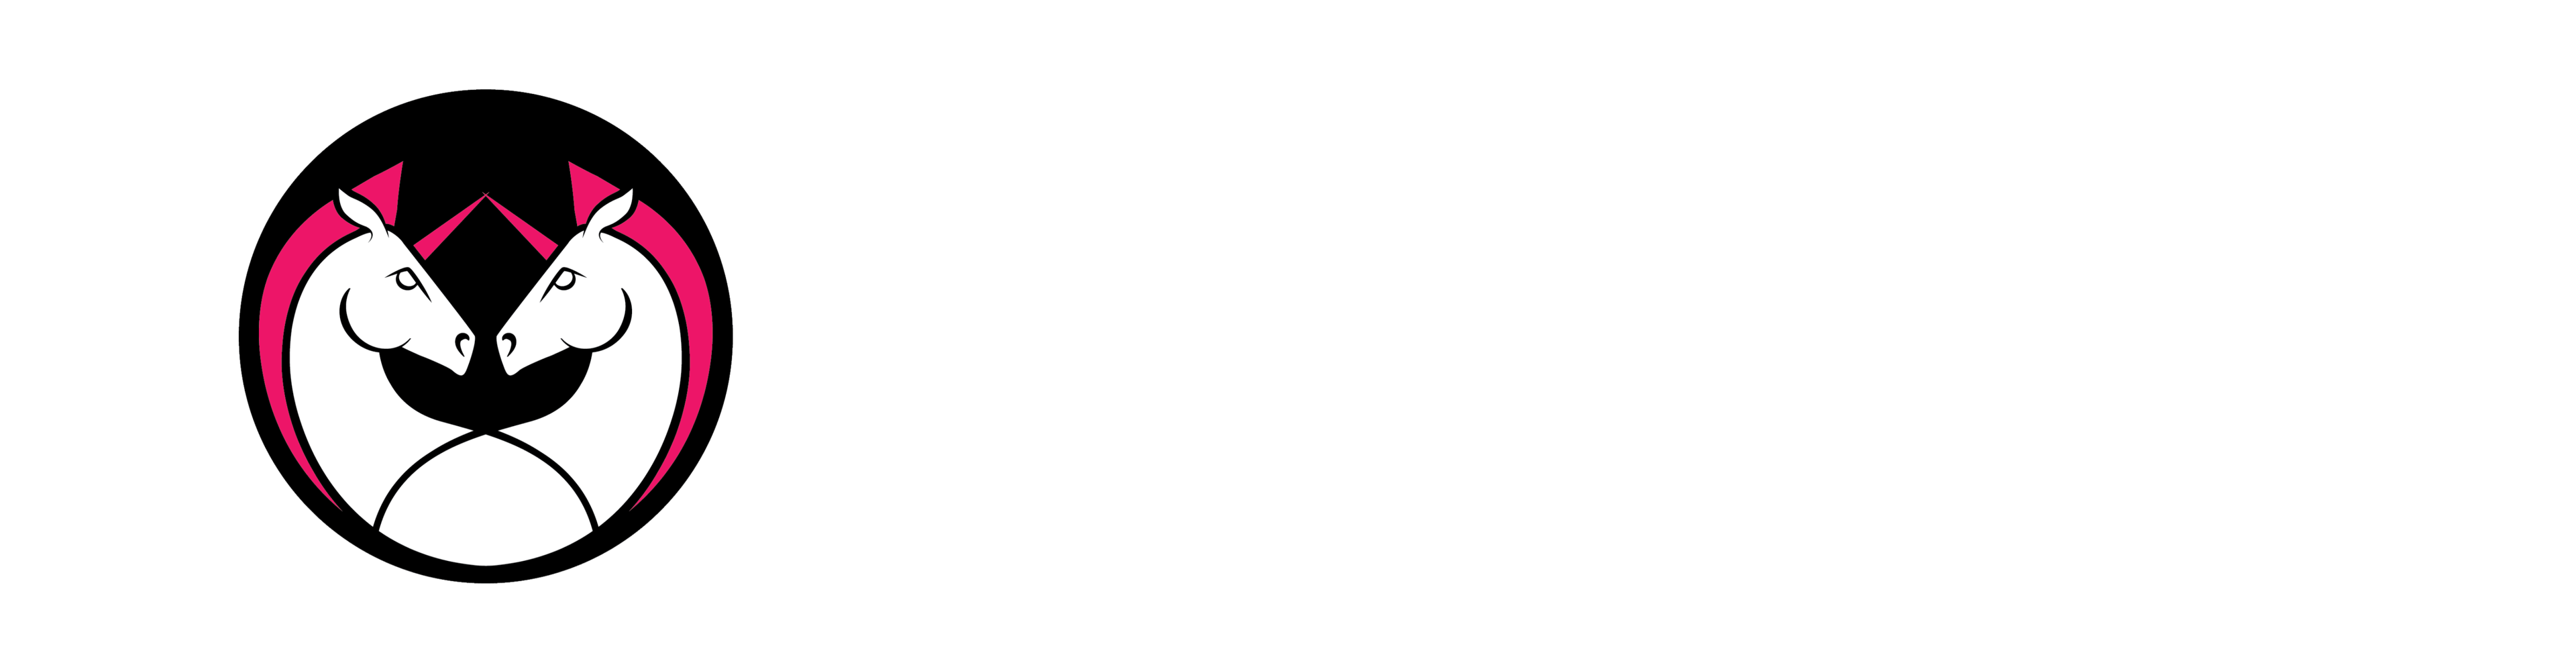 Rebellious Unicorns logo